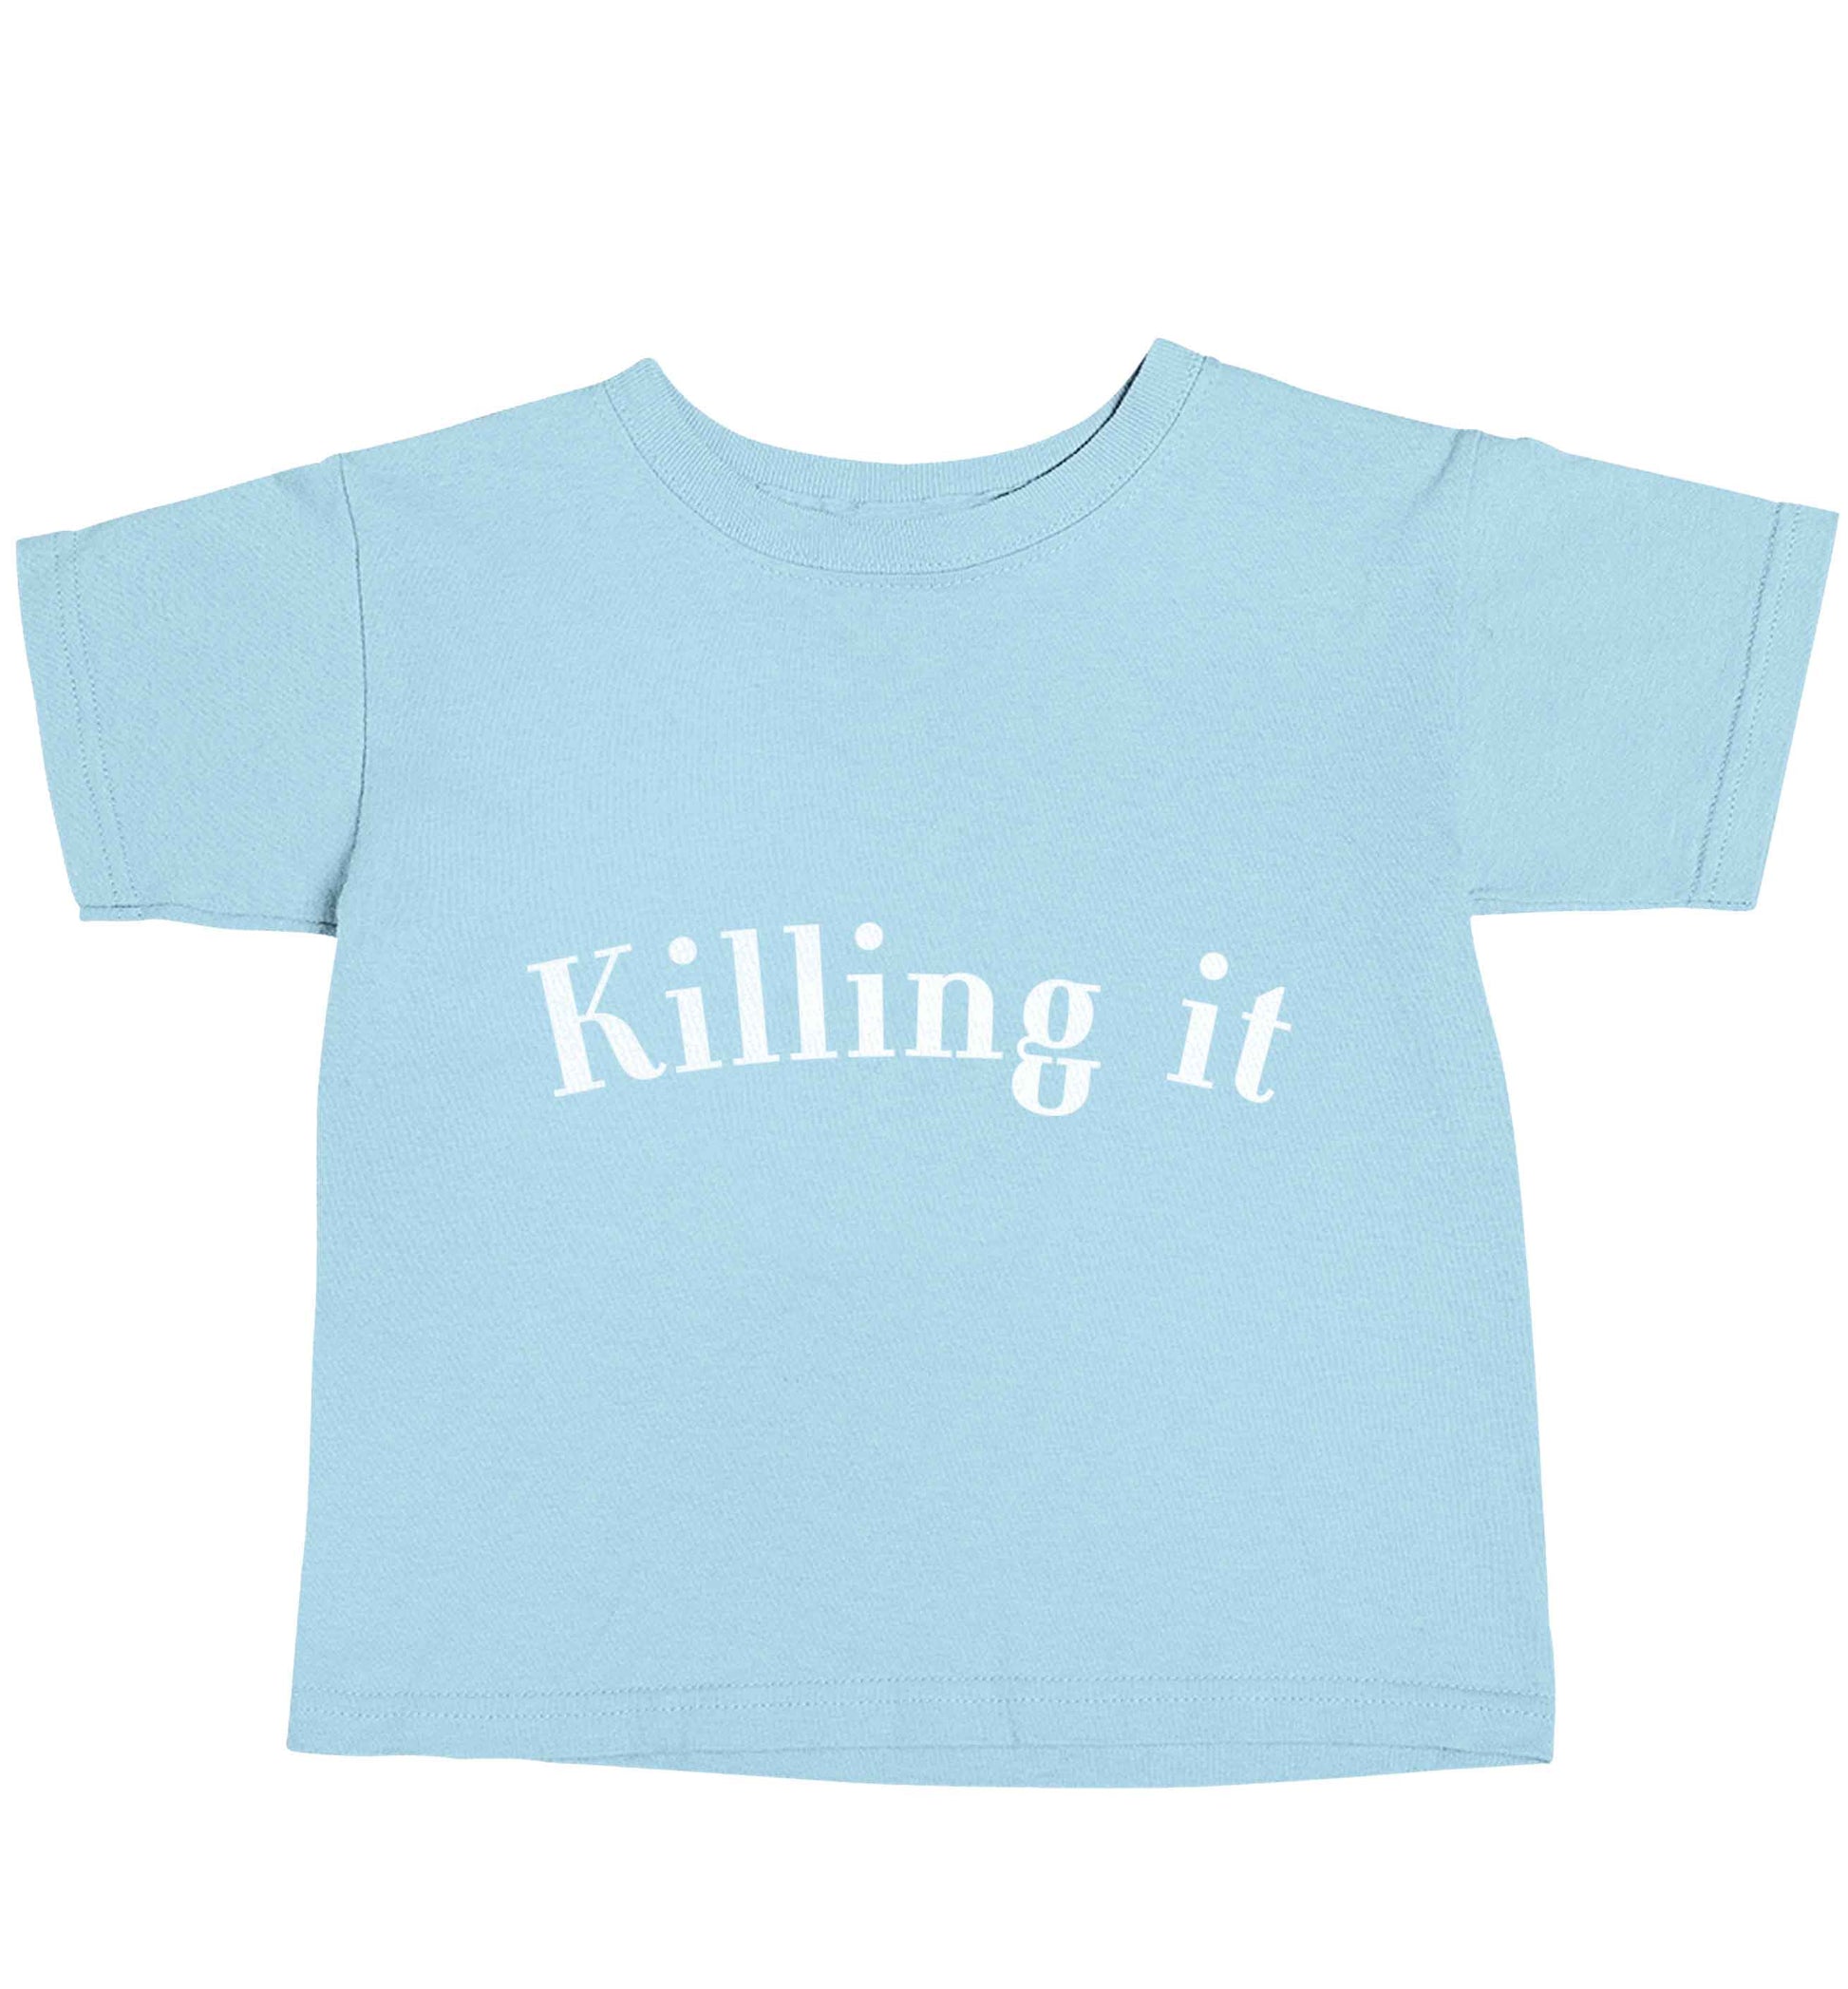 Killing it light blue baby toddler Tshirt 2 Years